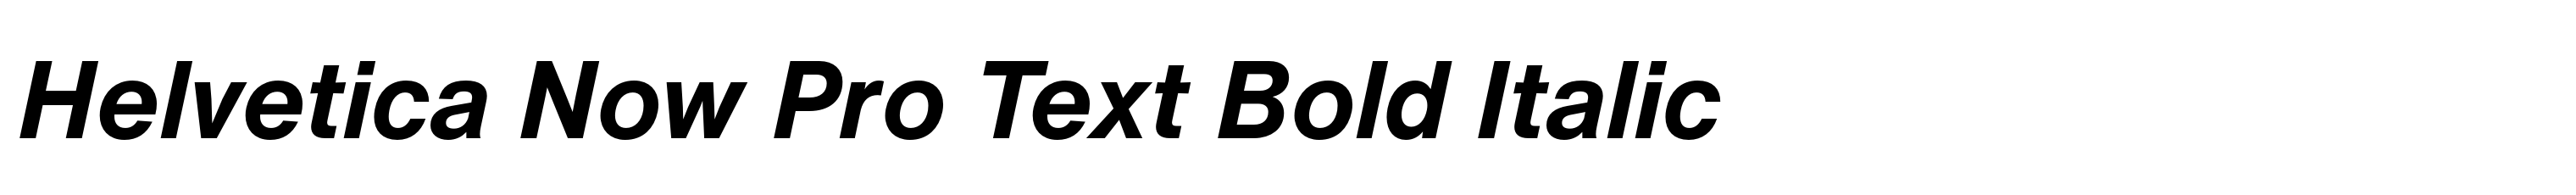 Helvetica Now Pro Text Bold Italic